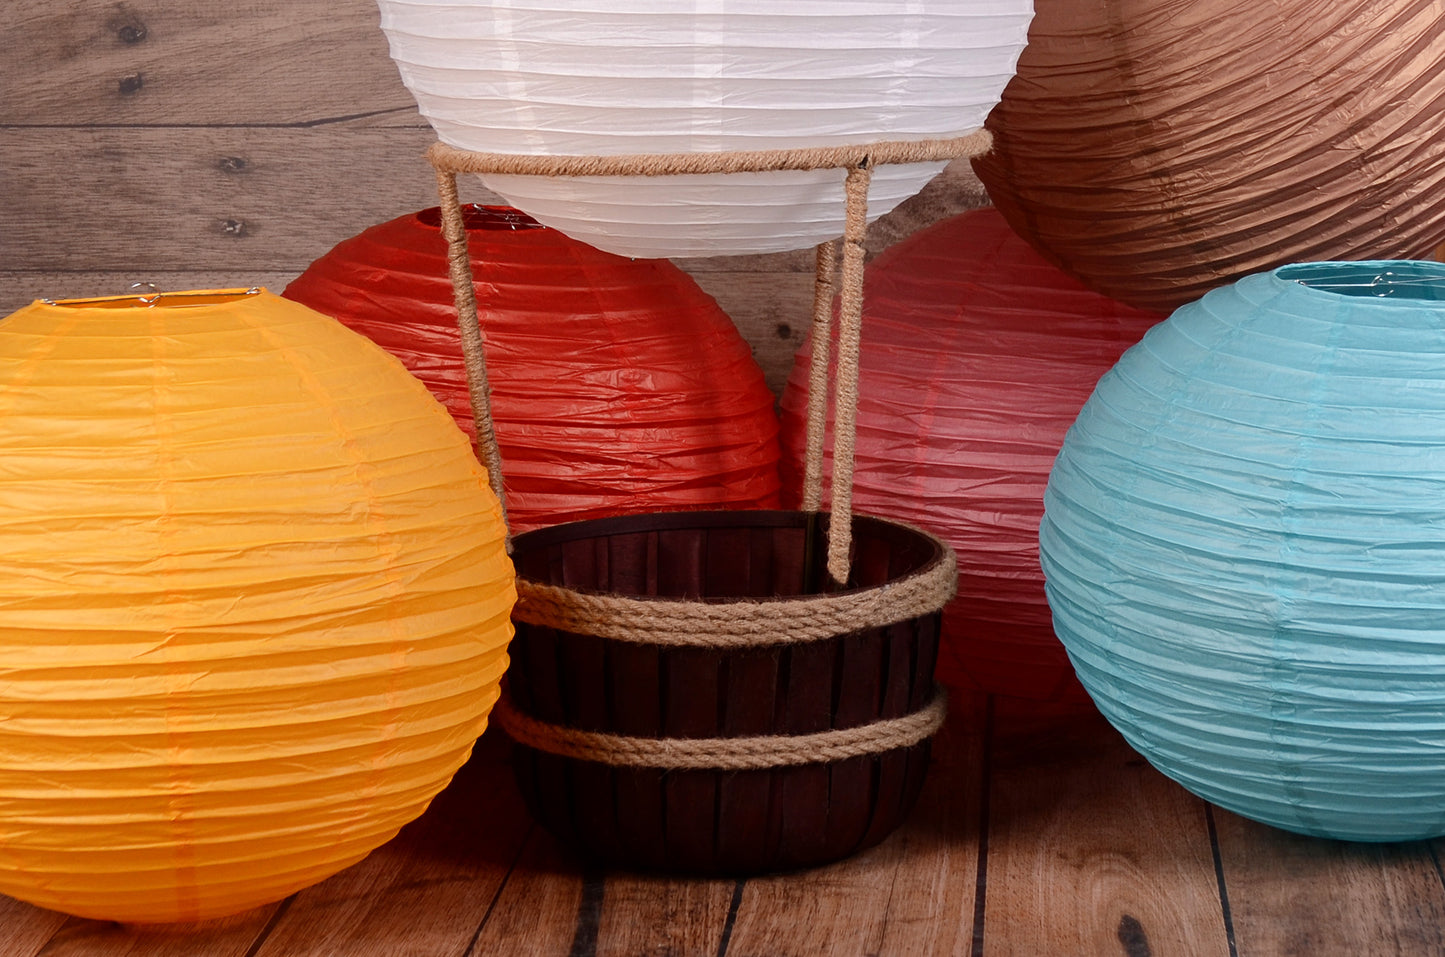 Hot Air Balloon Basket AND 6 Balloons-Newborn Photography Props